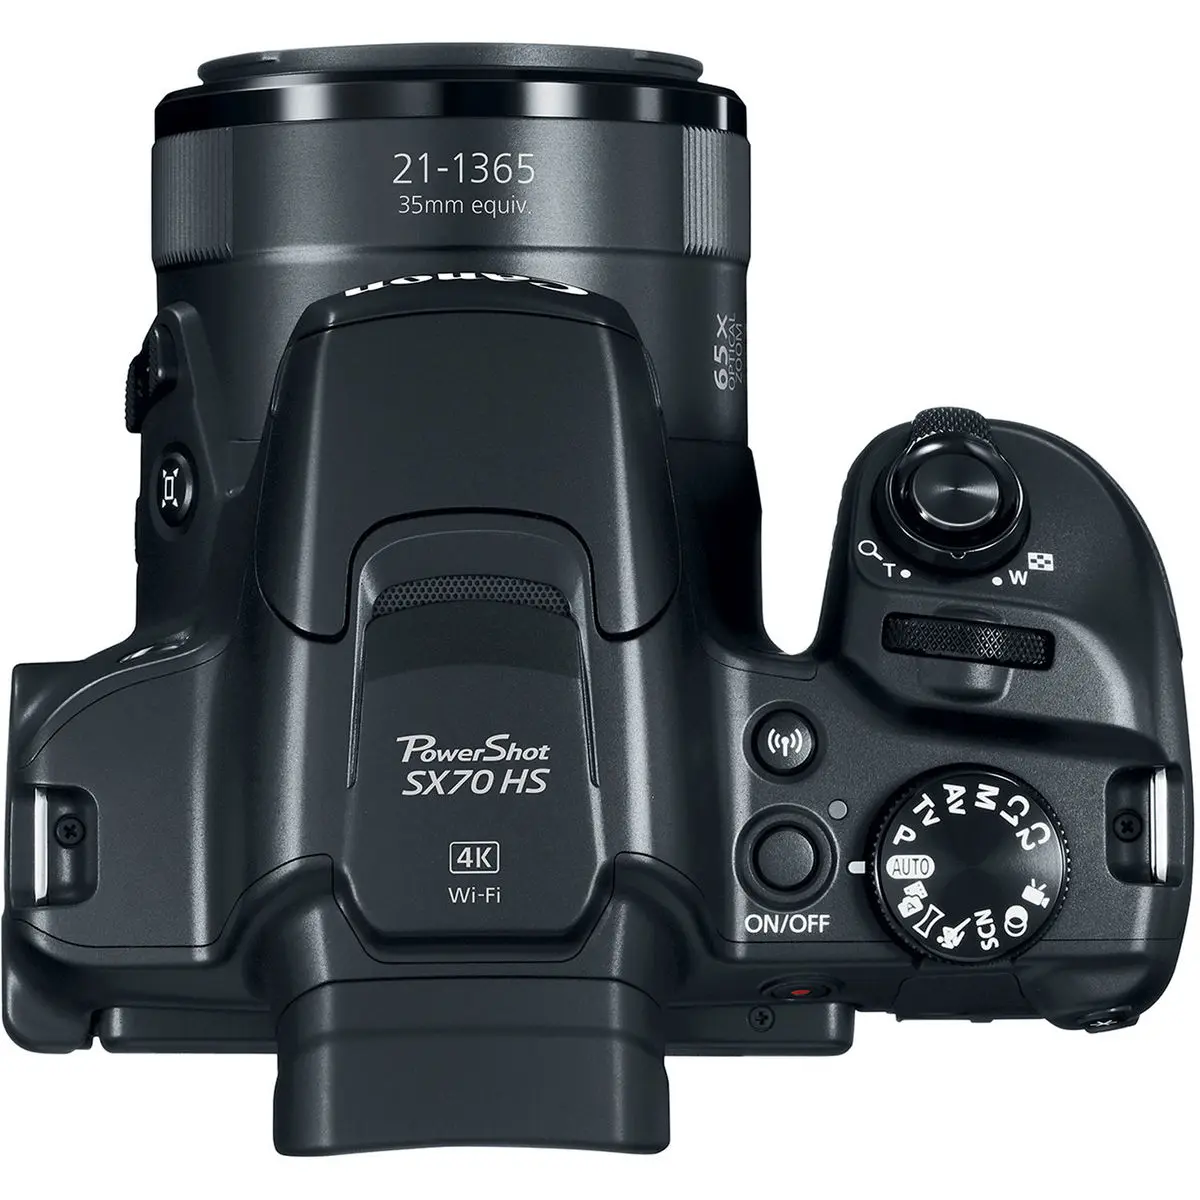 5. Canon PowerShot SX70 HS Black Camera